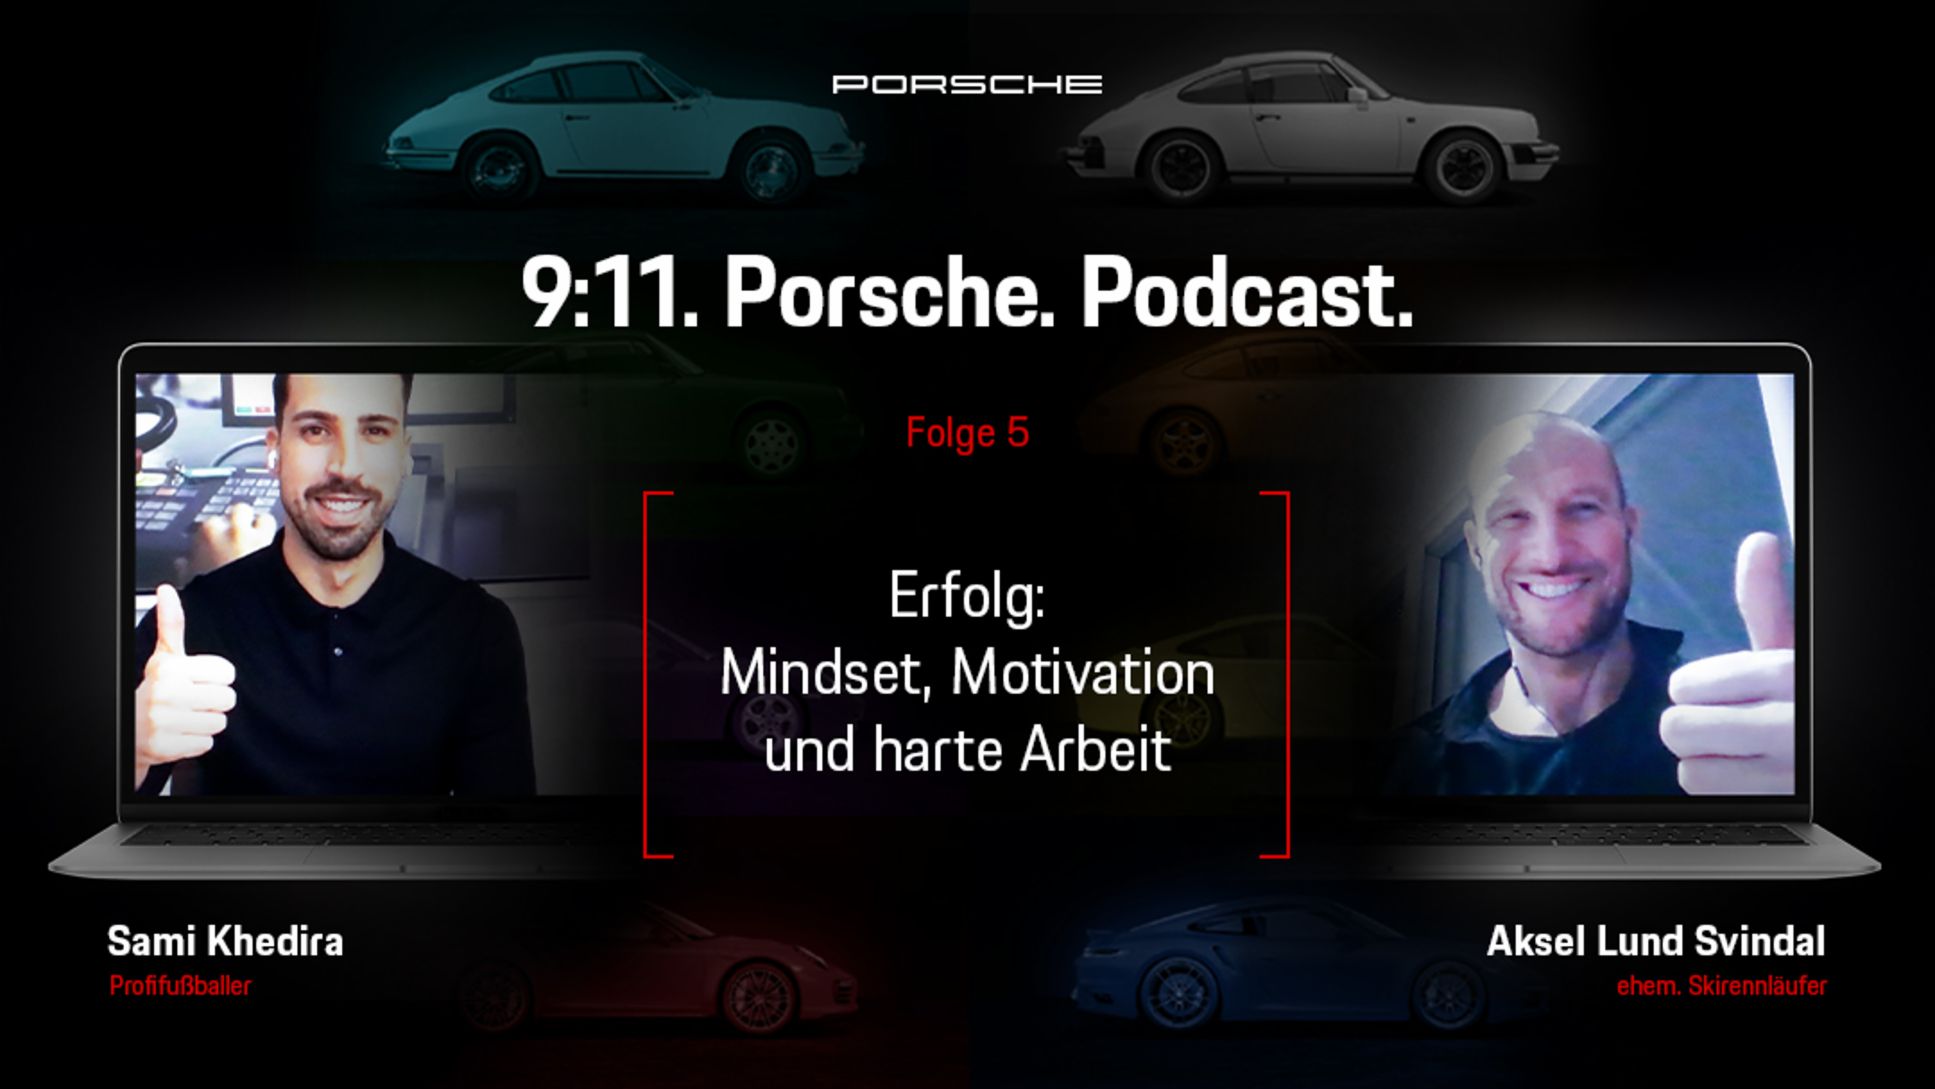 Sami Khedira, Botschafter der Porsche Jugendförderung „Turbo für Talente", Aksel Lund Svindal, Porsche-Markenbotschafter, l-r, Podcast 9:11, Folge 5, 2021, Porsche AG